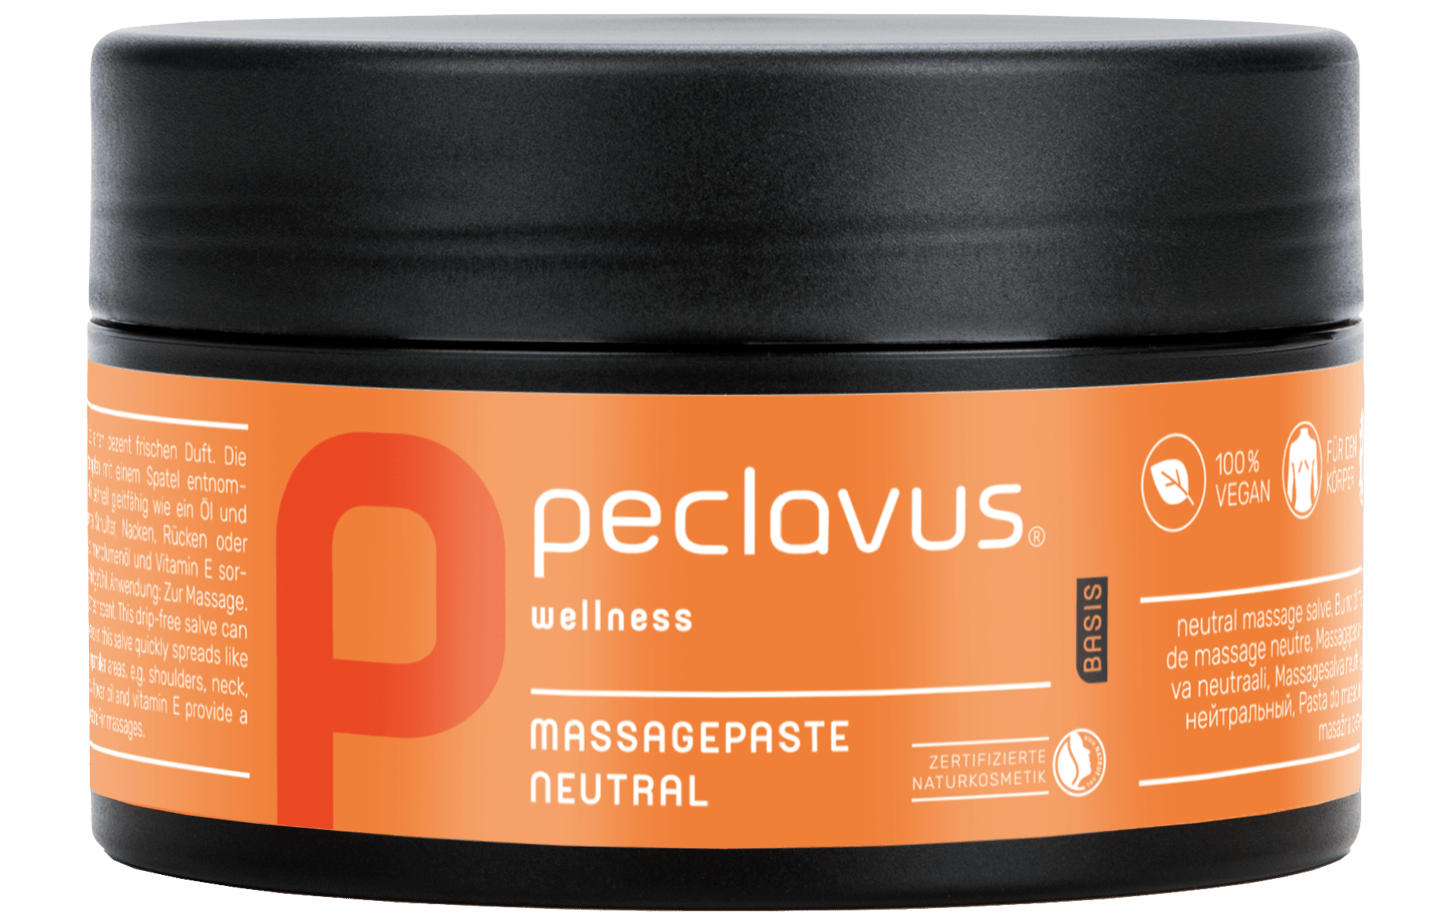 peclavus - Massagepaste Neutral | Basis, 250 ml